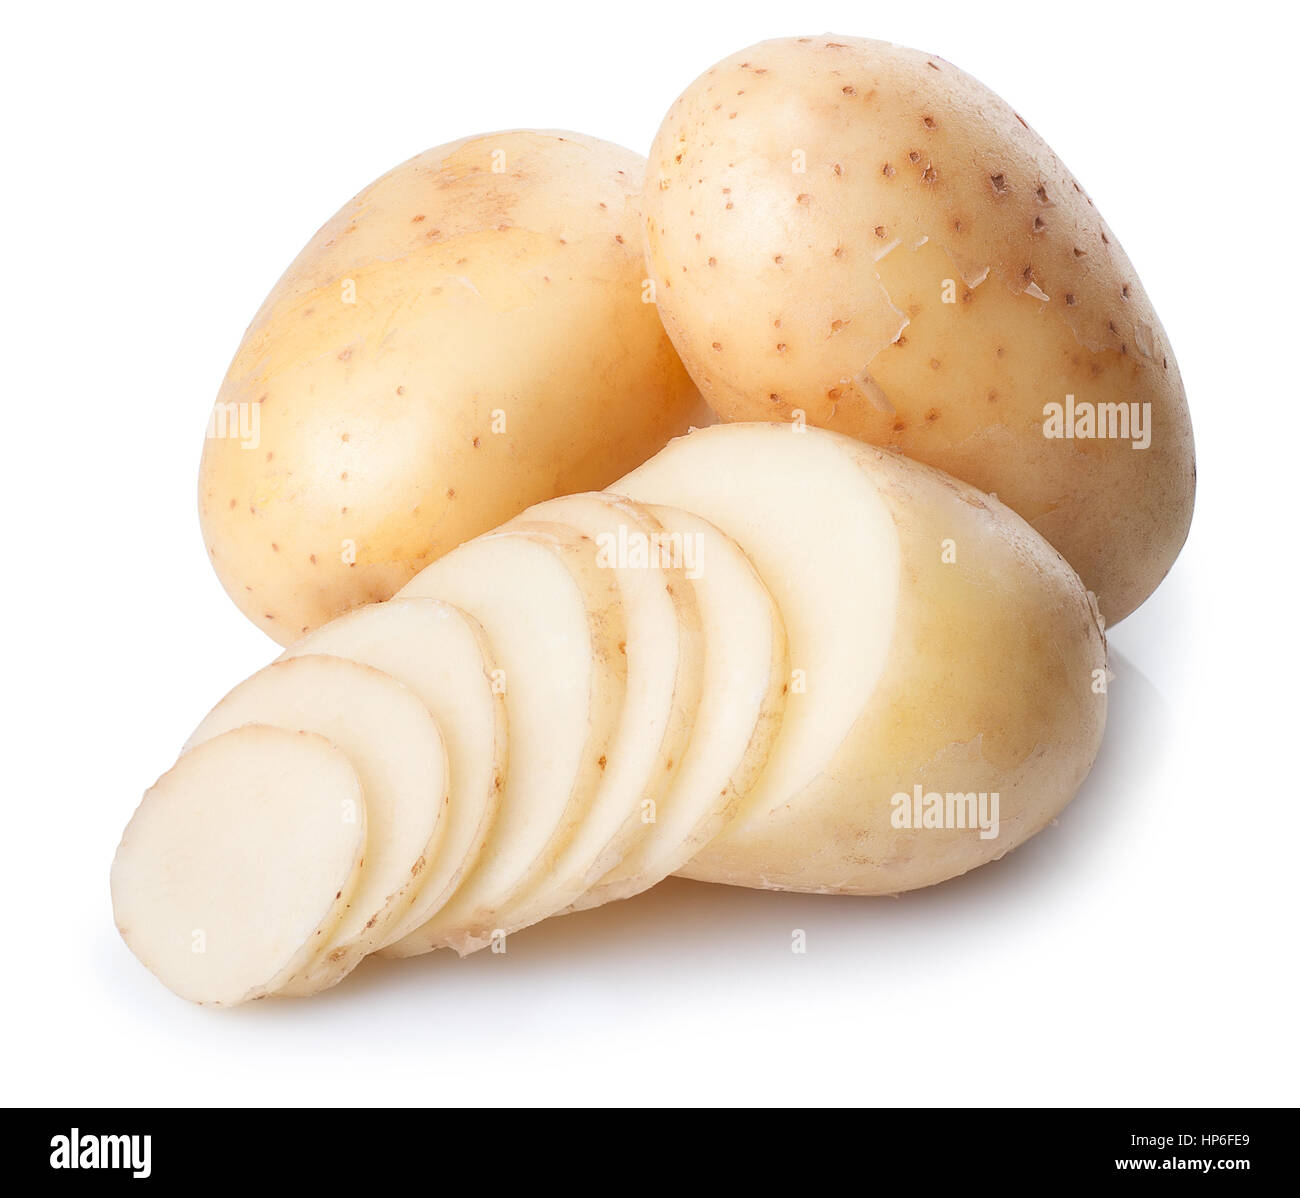 Sliced potatoes. Fresh potatoes isolated on white background. New whole potato and slices isolated on white background closeup Stock Photo